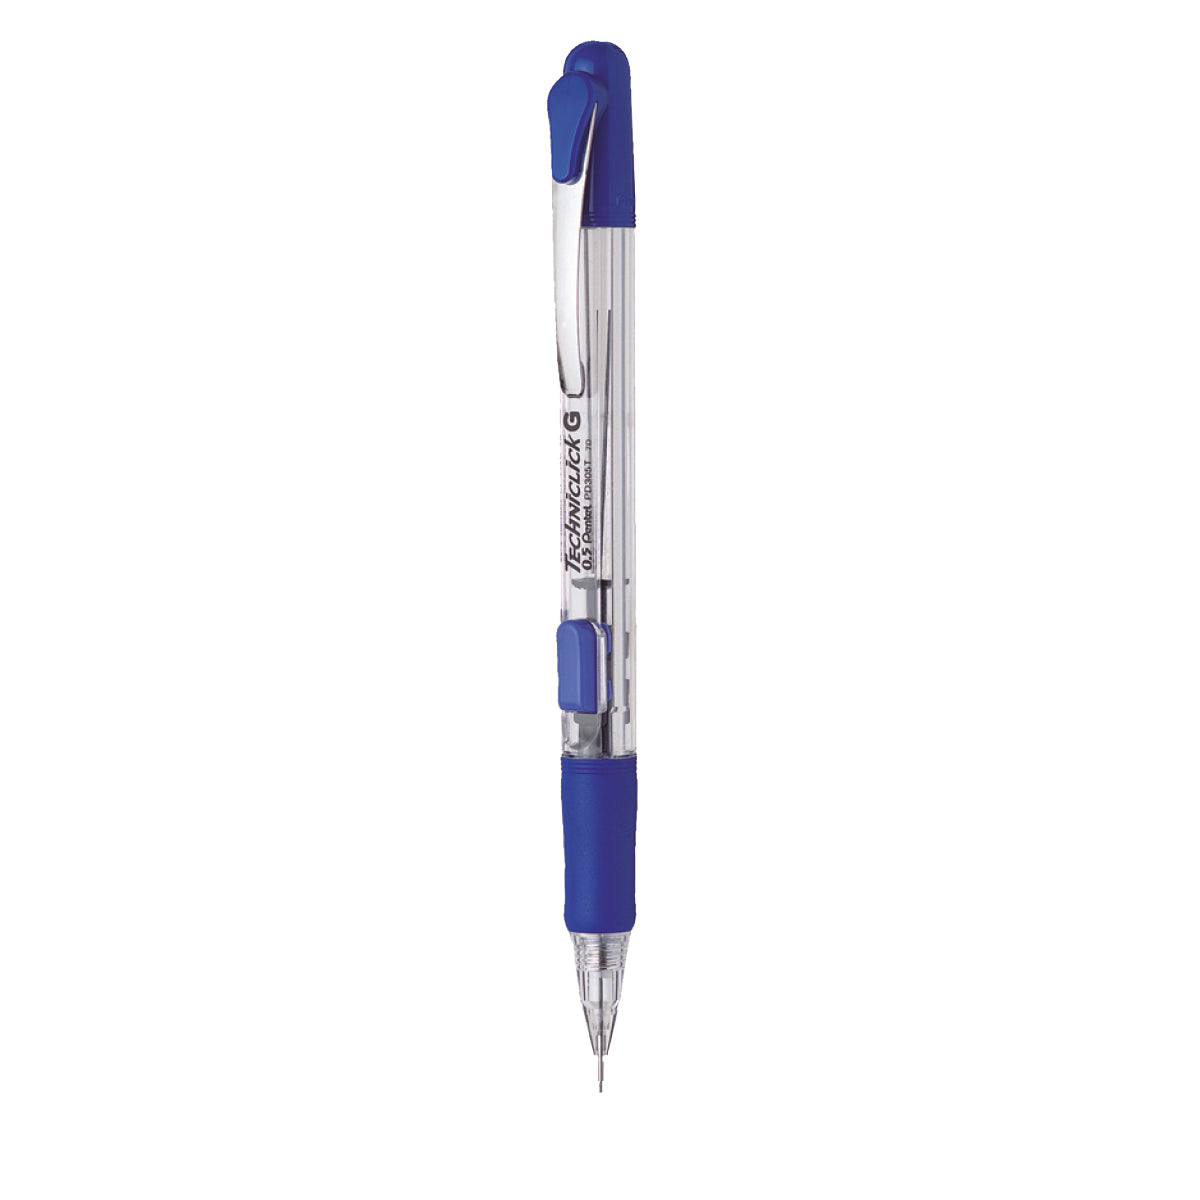 Shop Pentel Mechanical Draft Pencil online in Abu Dhabi, UAE